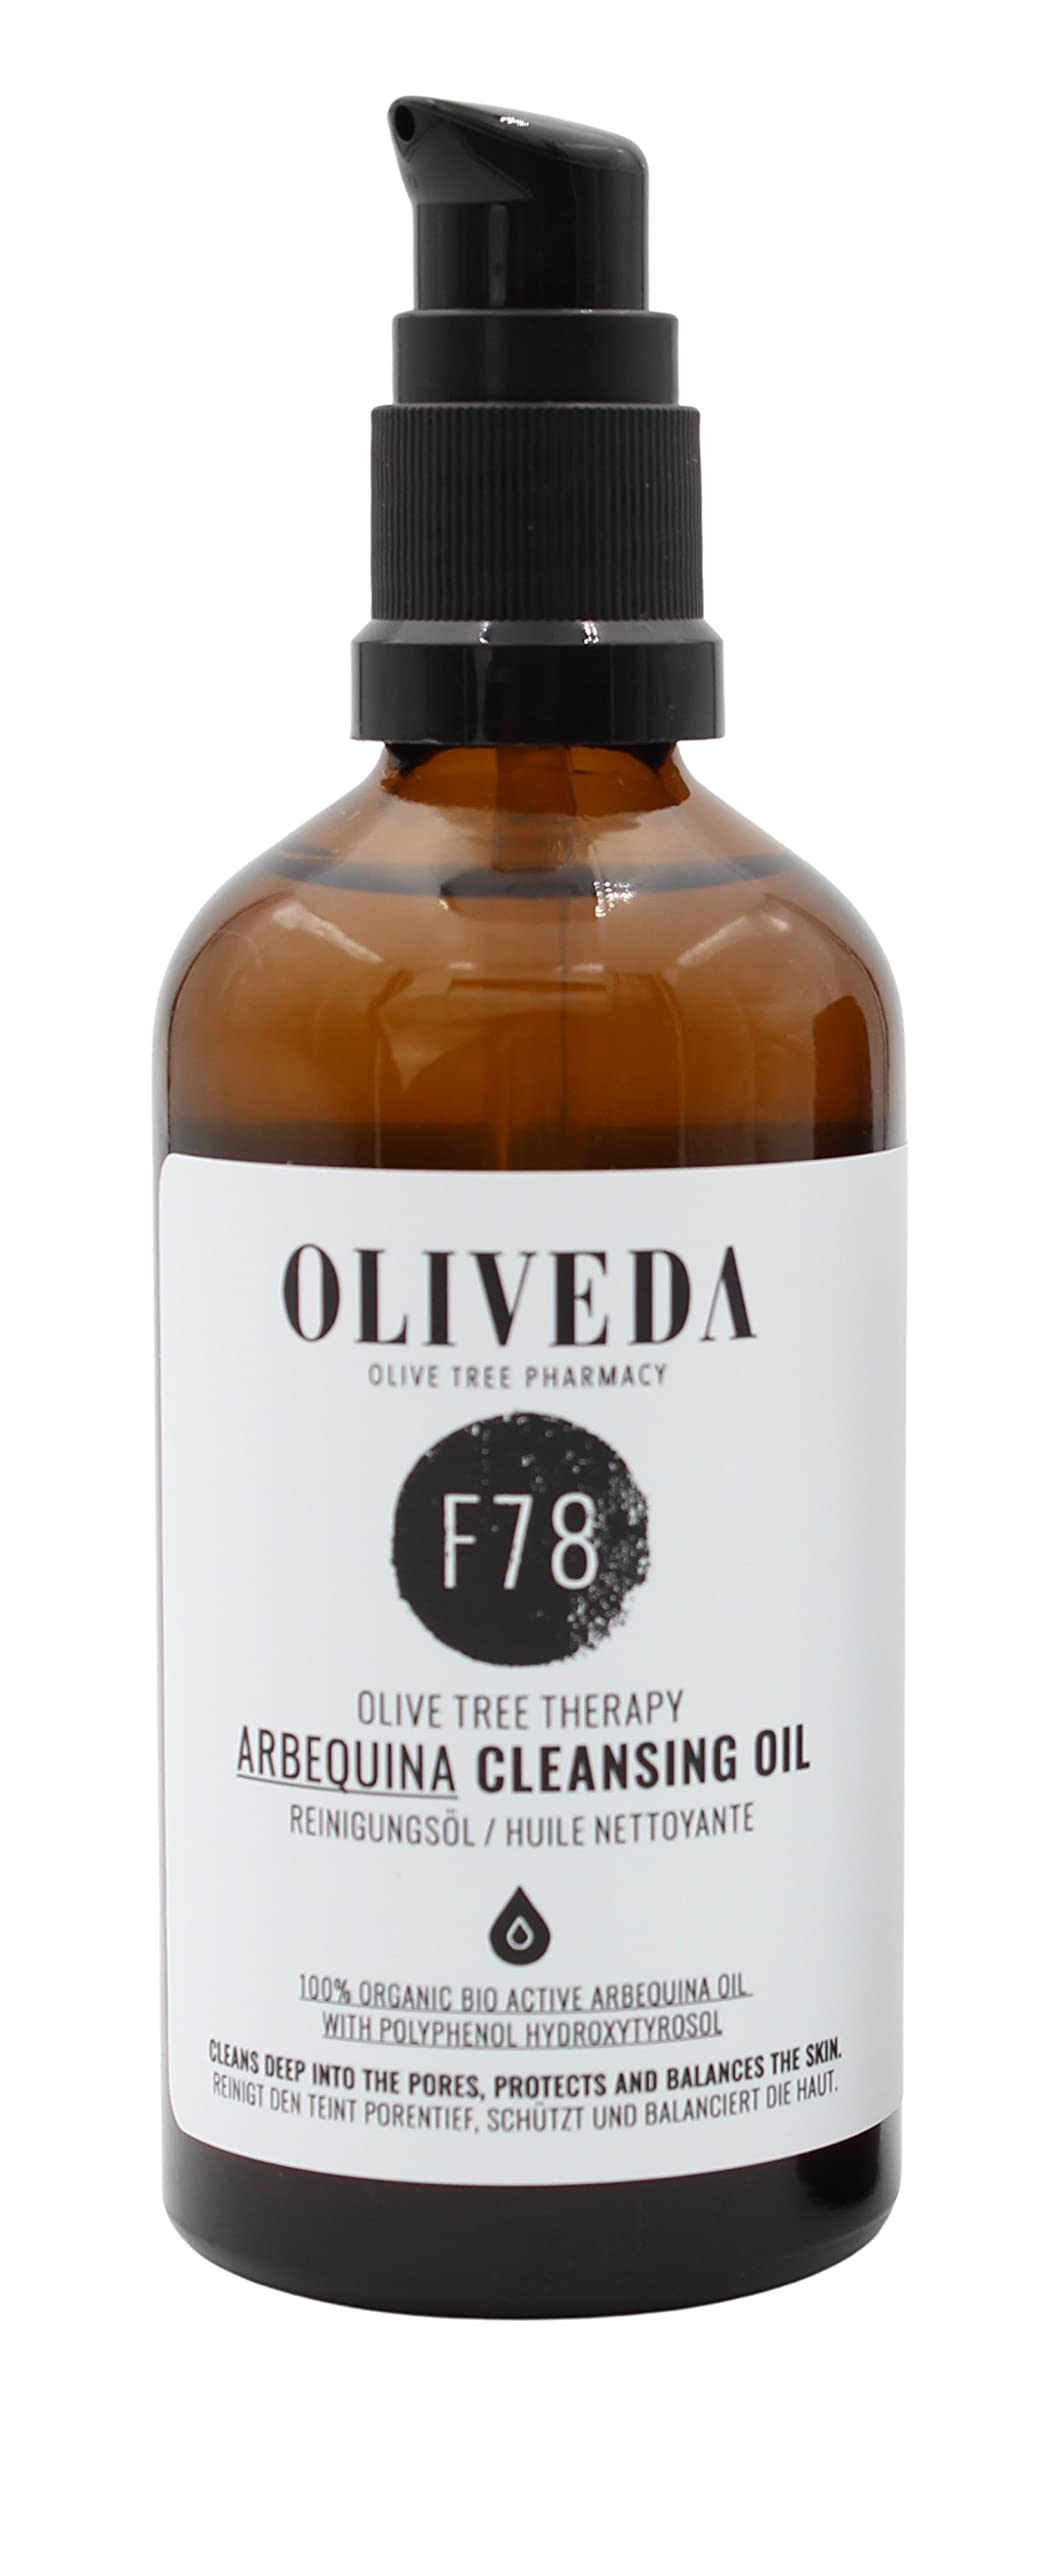 Oliveda F78 Arbequina Cleansing Oil 100ml I Bioaktives Reinigungsöl